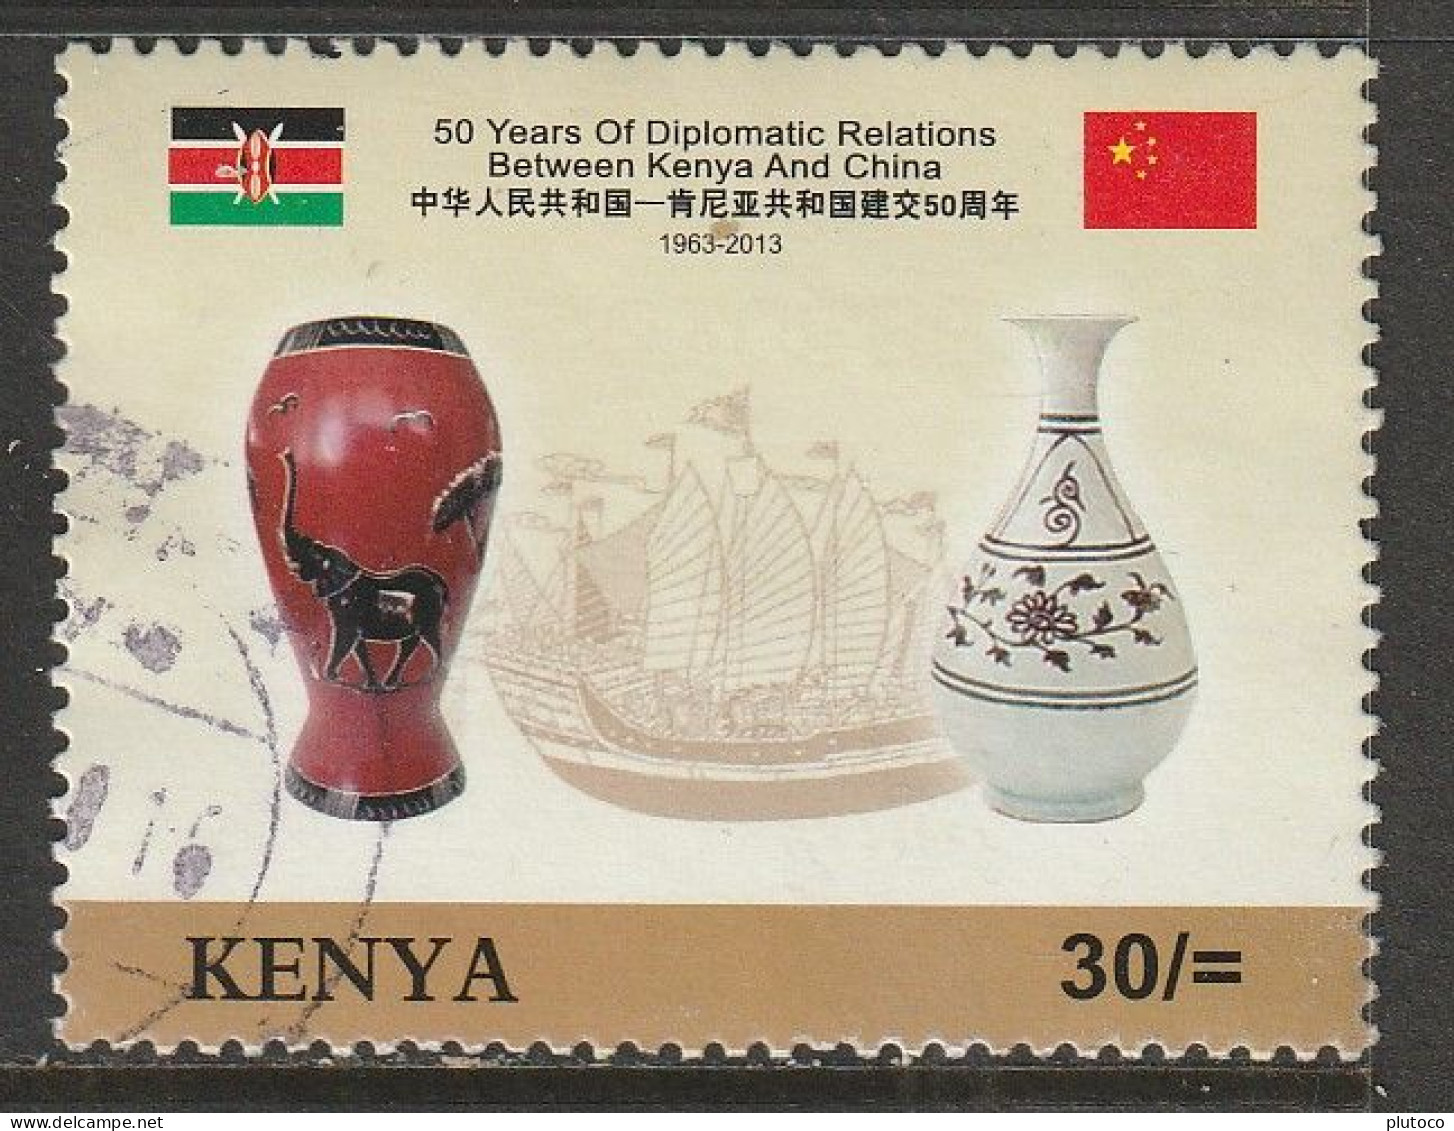 KENYA, USED STAMP, OBLITERÉ, SELLO USADO - Kenia (1963-...)